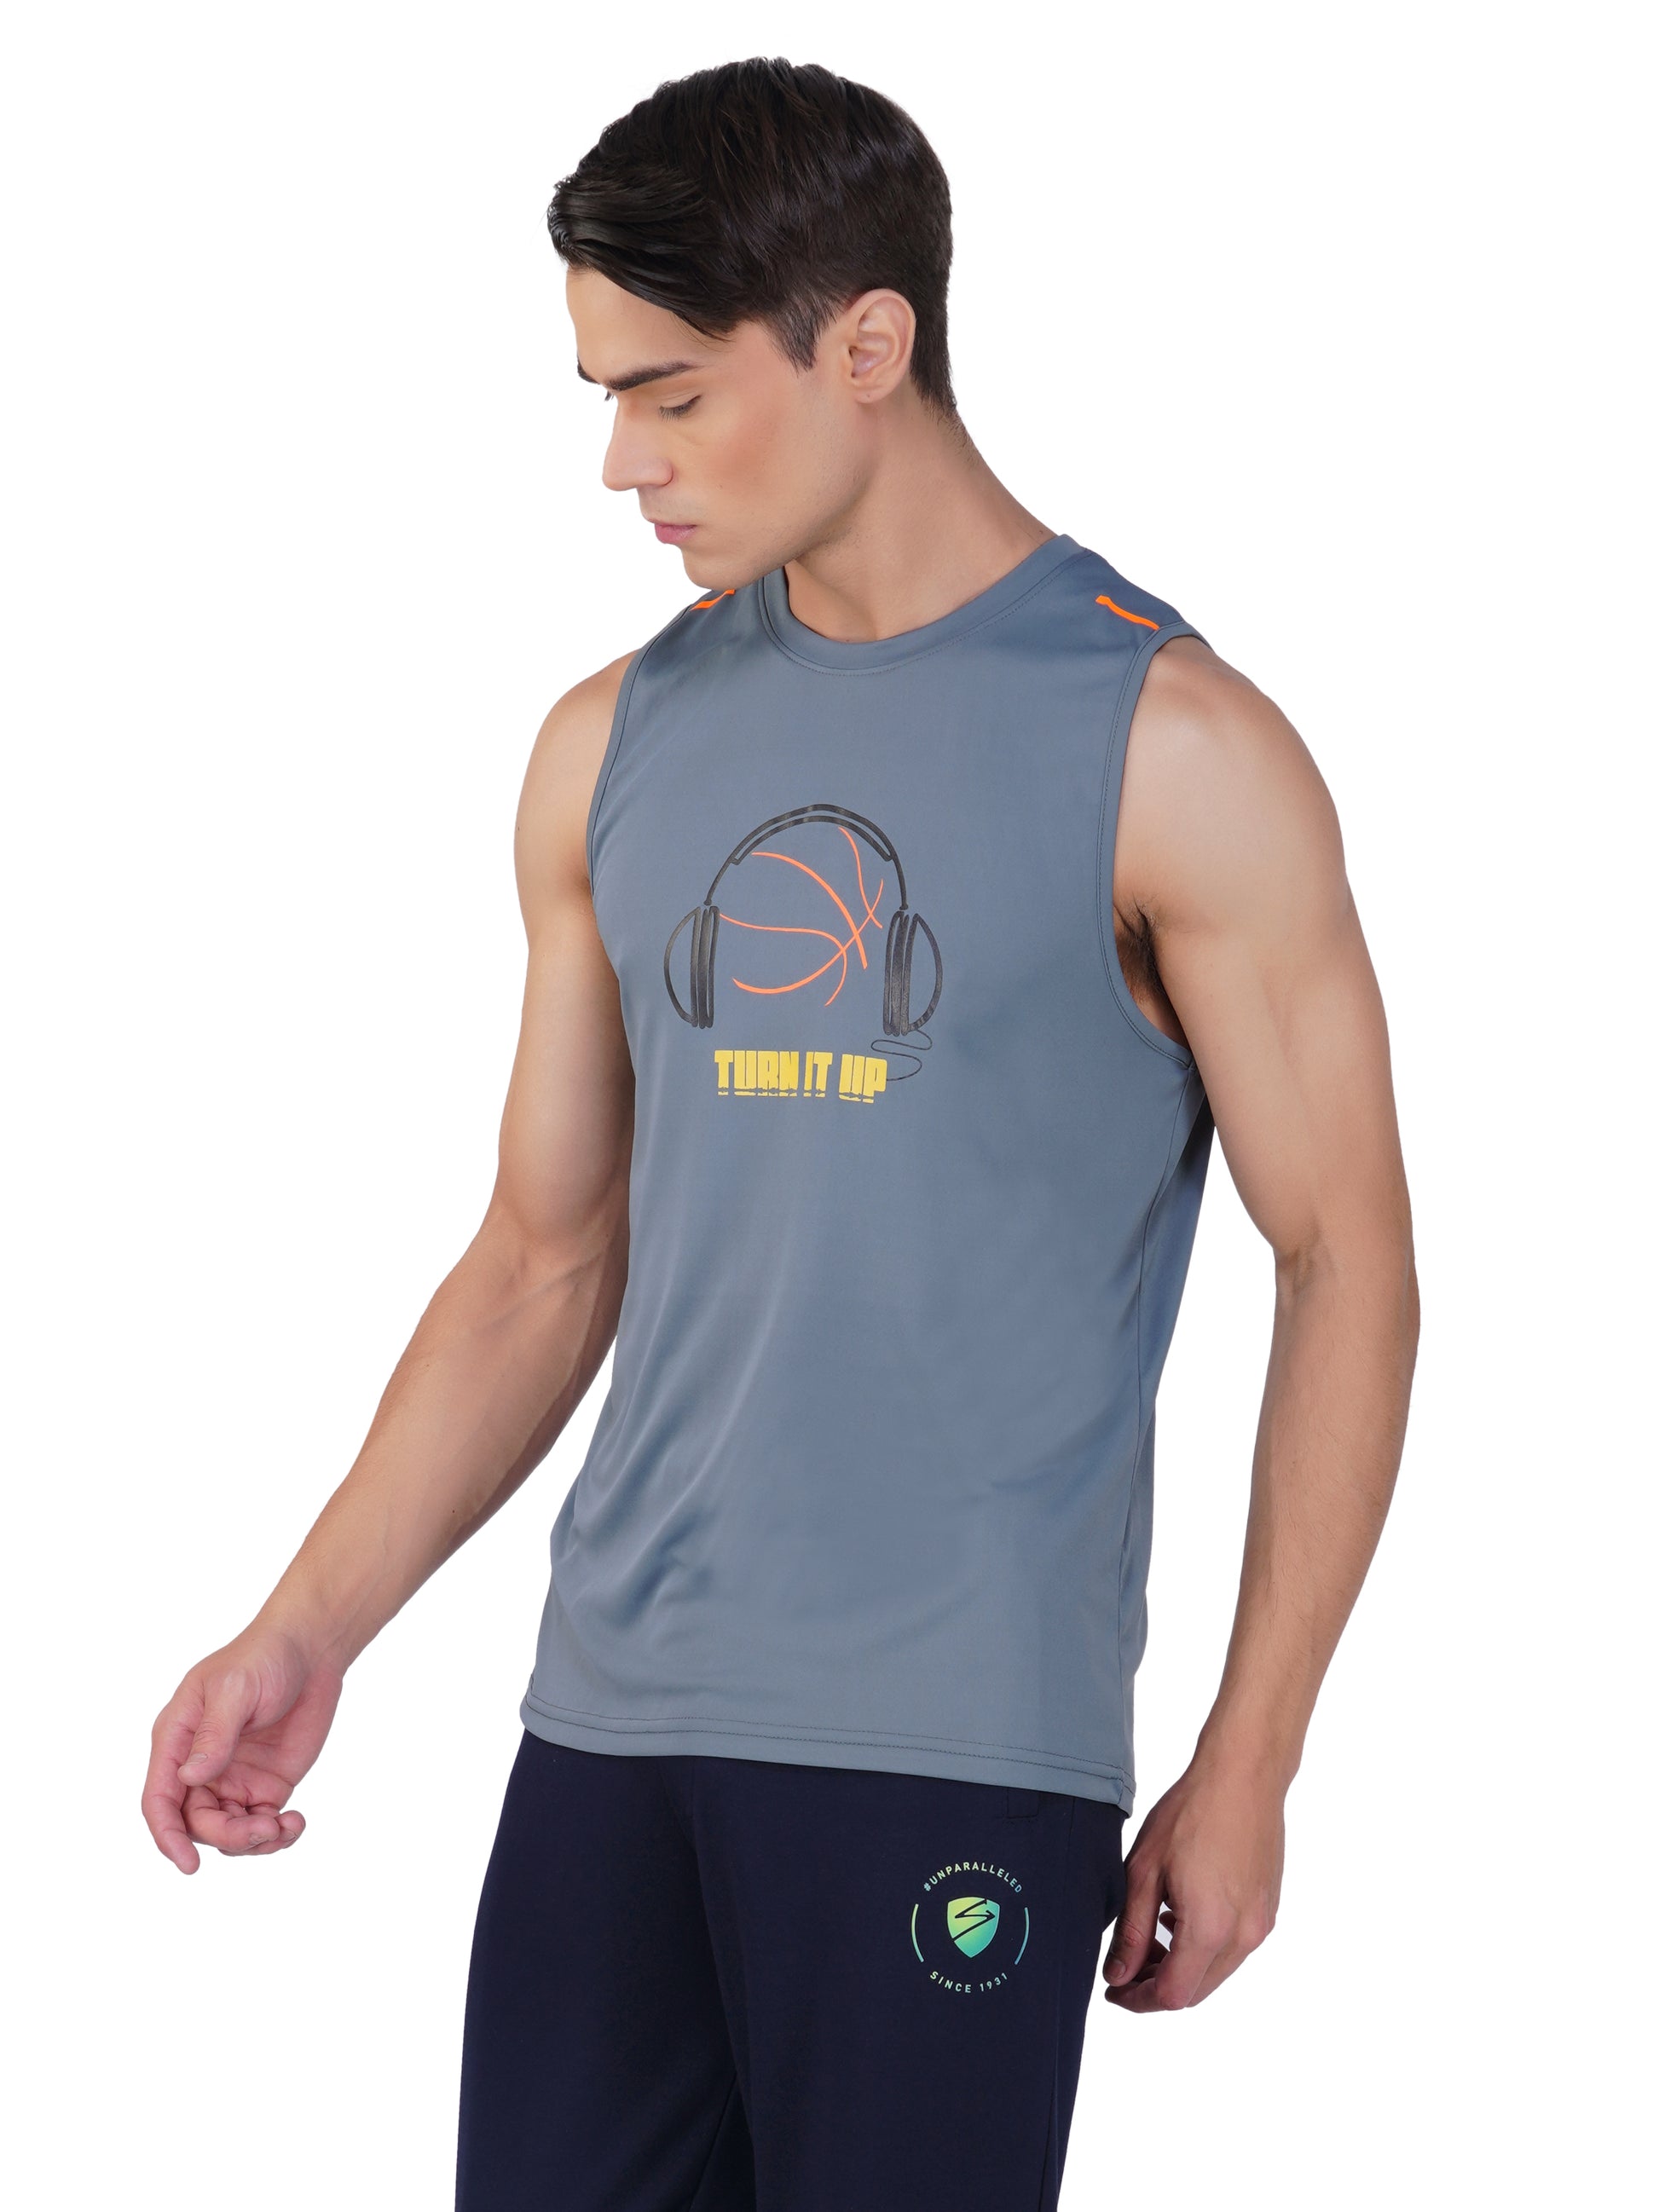 SG Men's Regular Fit Sports & Gym Vest for Mens & Boys | Ideal for Trail Running, Fitness & Training, Jogging, Regular & Fashion Wear